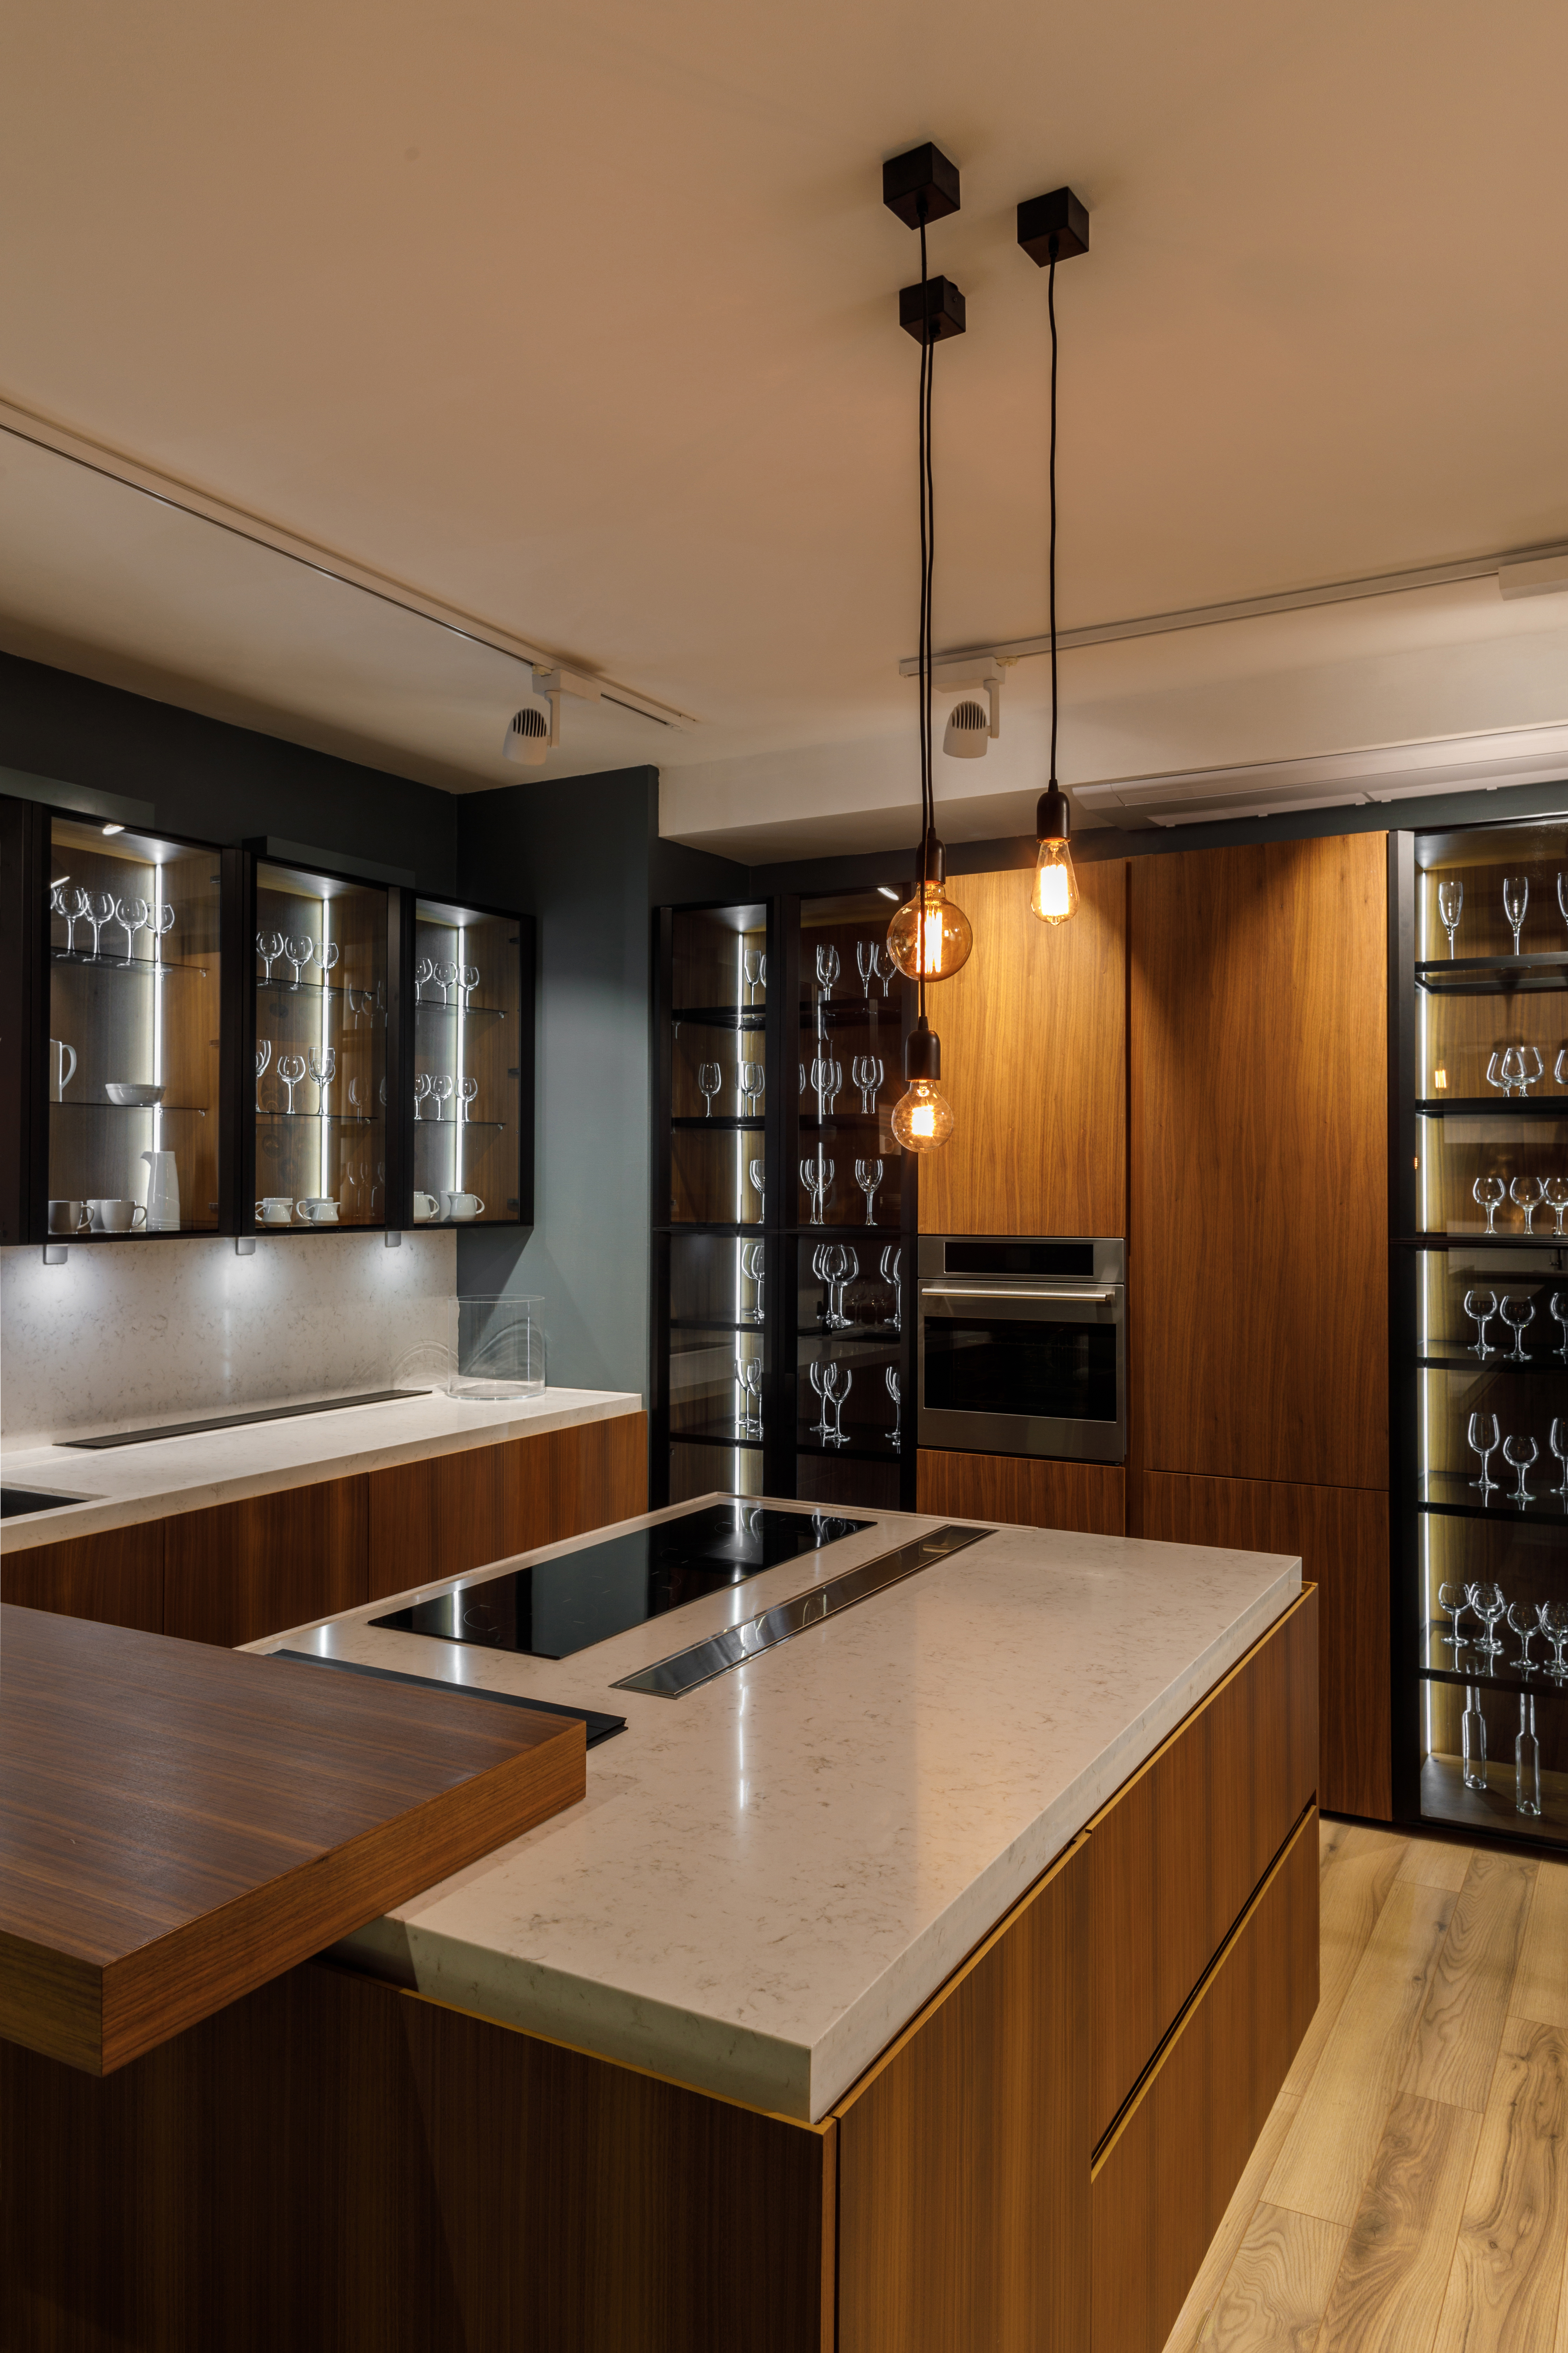 Stylish kitchen with elegant wooden cabinets